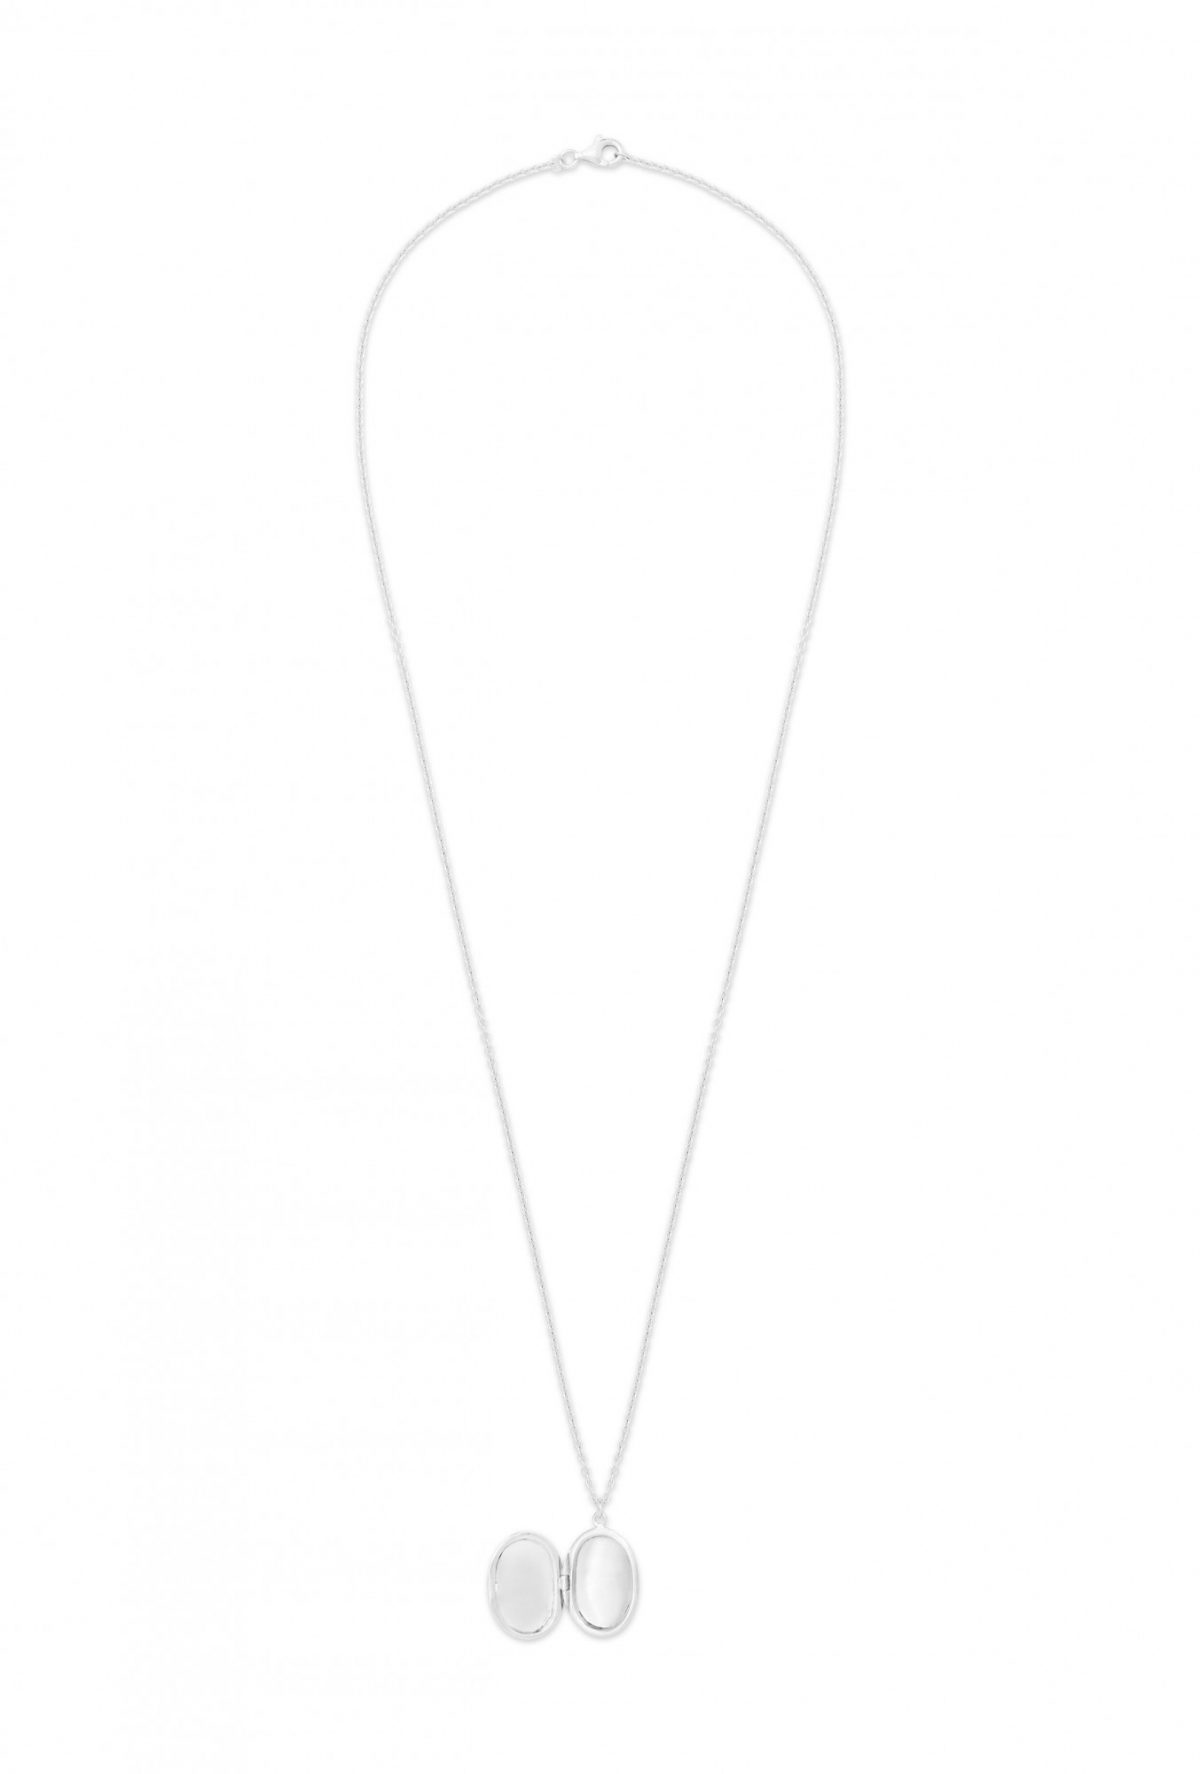 Diamond Locket Necklace (Personalize)